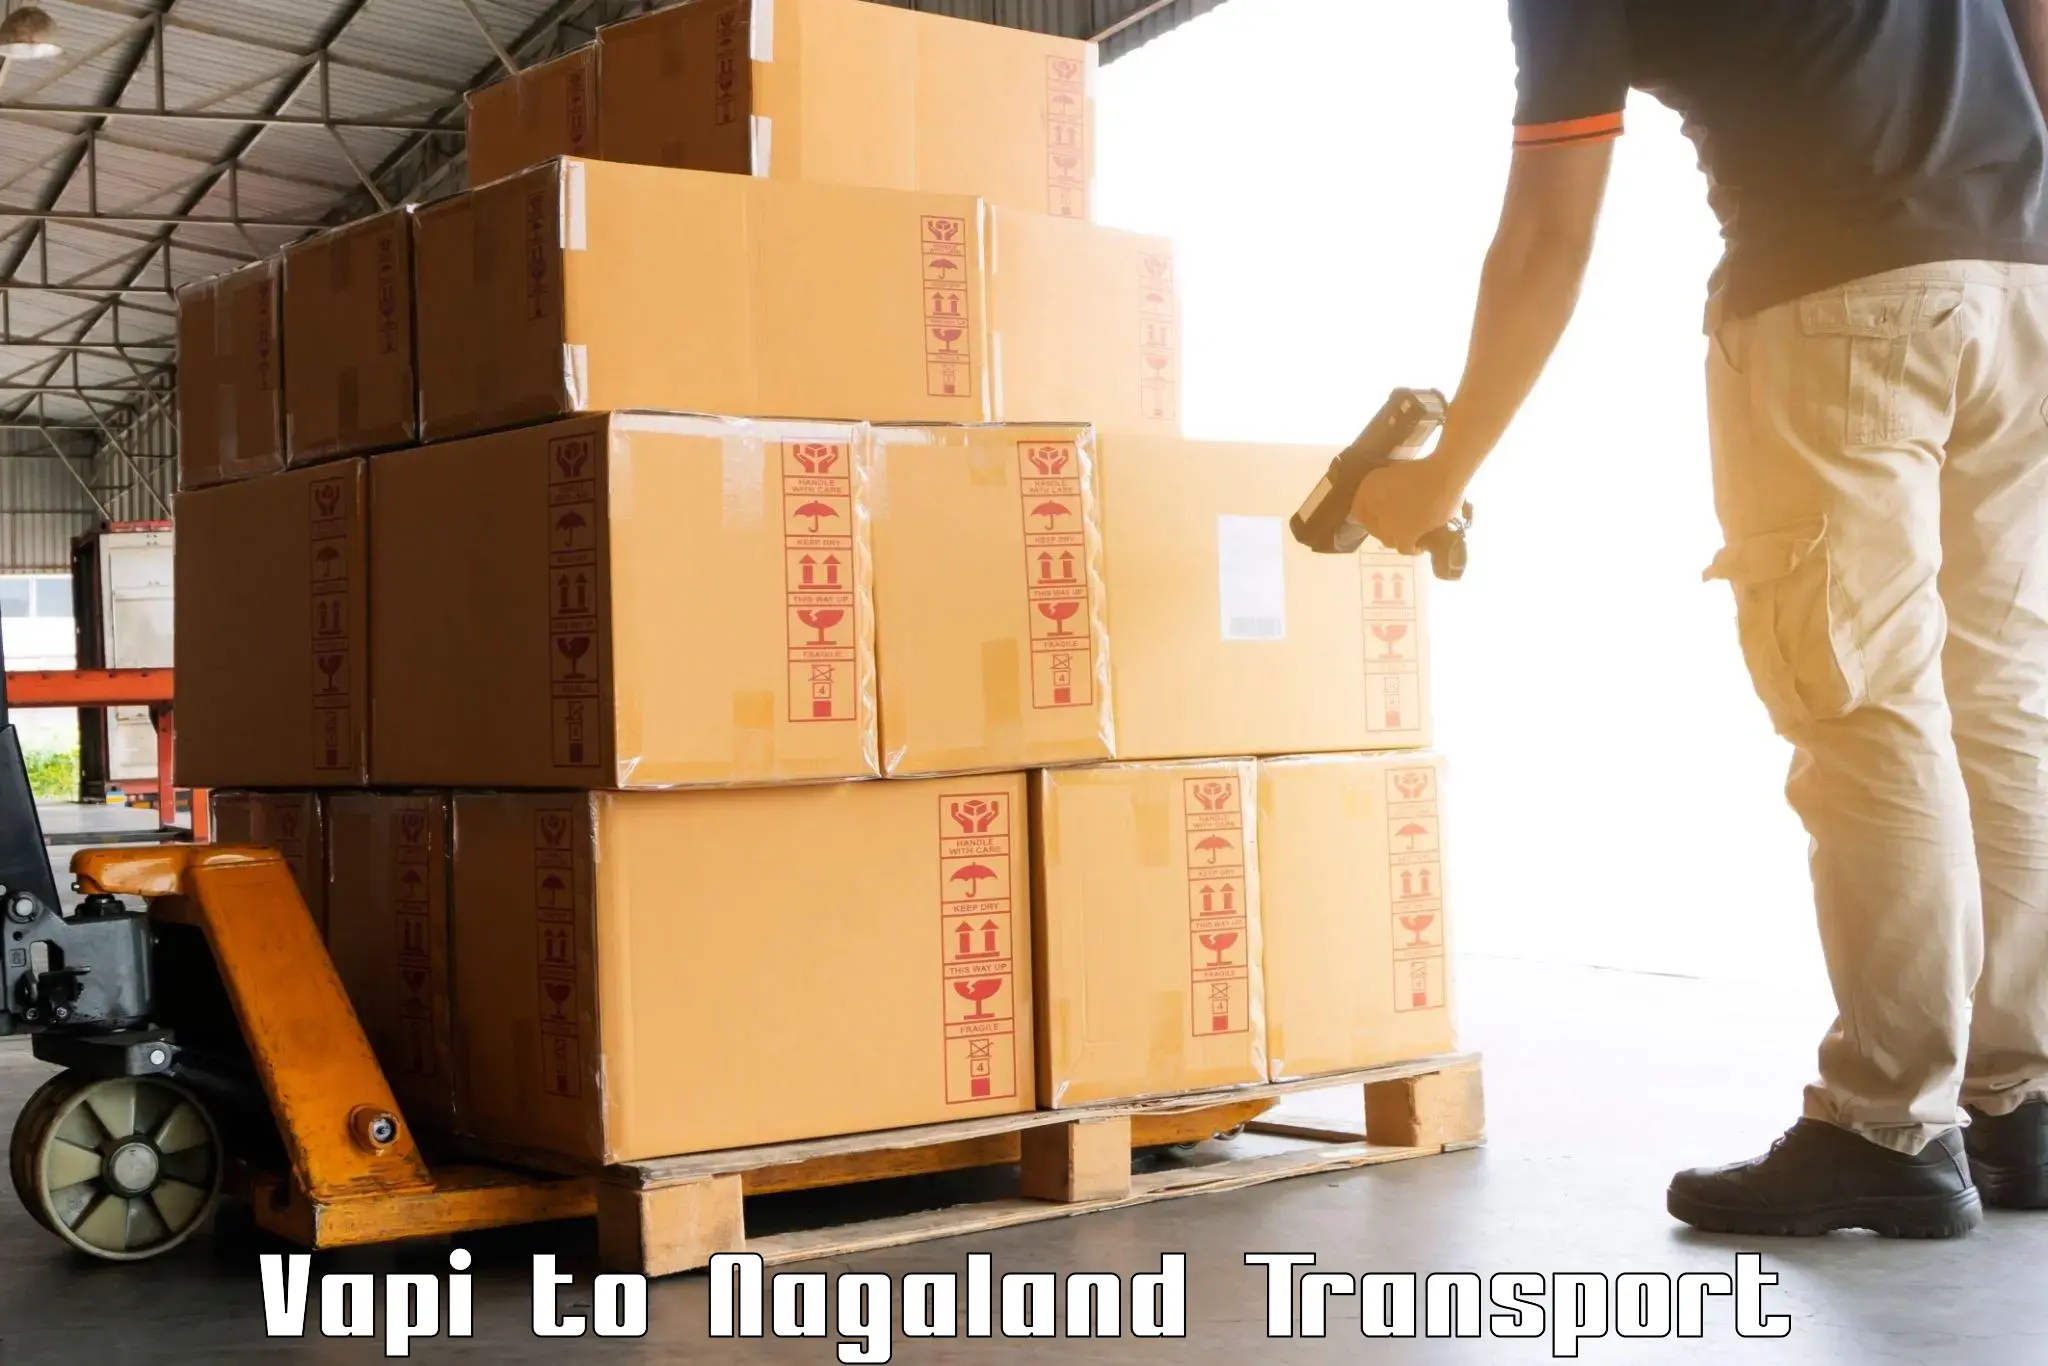 Cycle transportation service Vapi to Nagaland